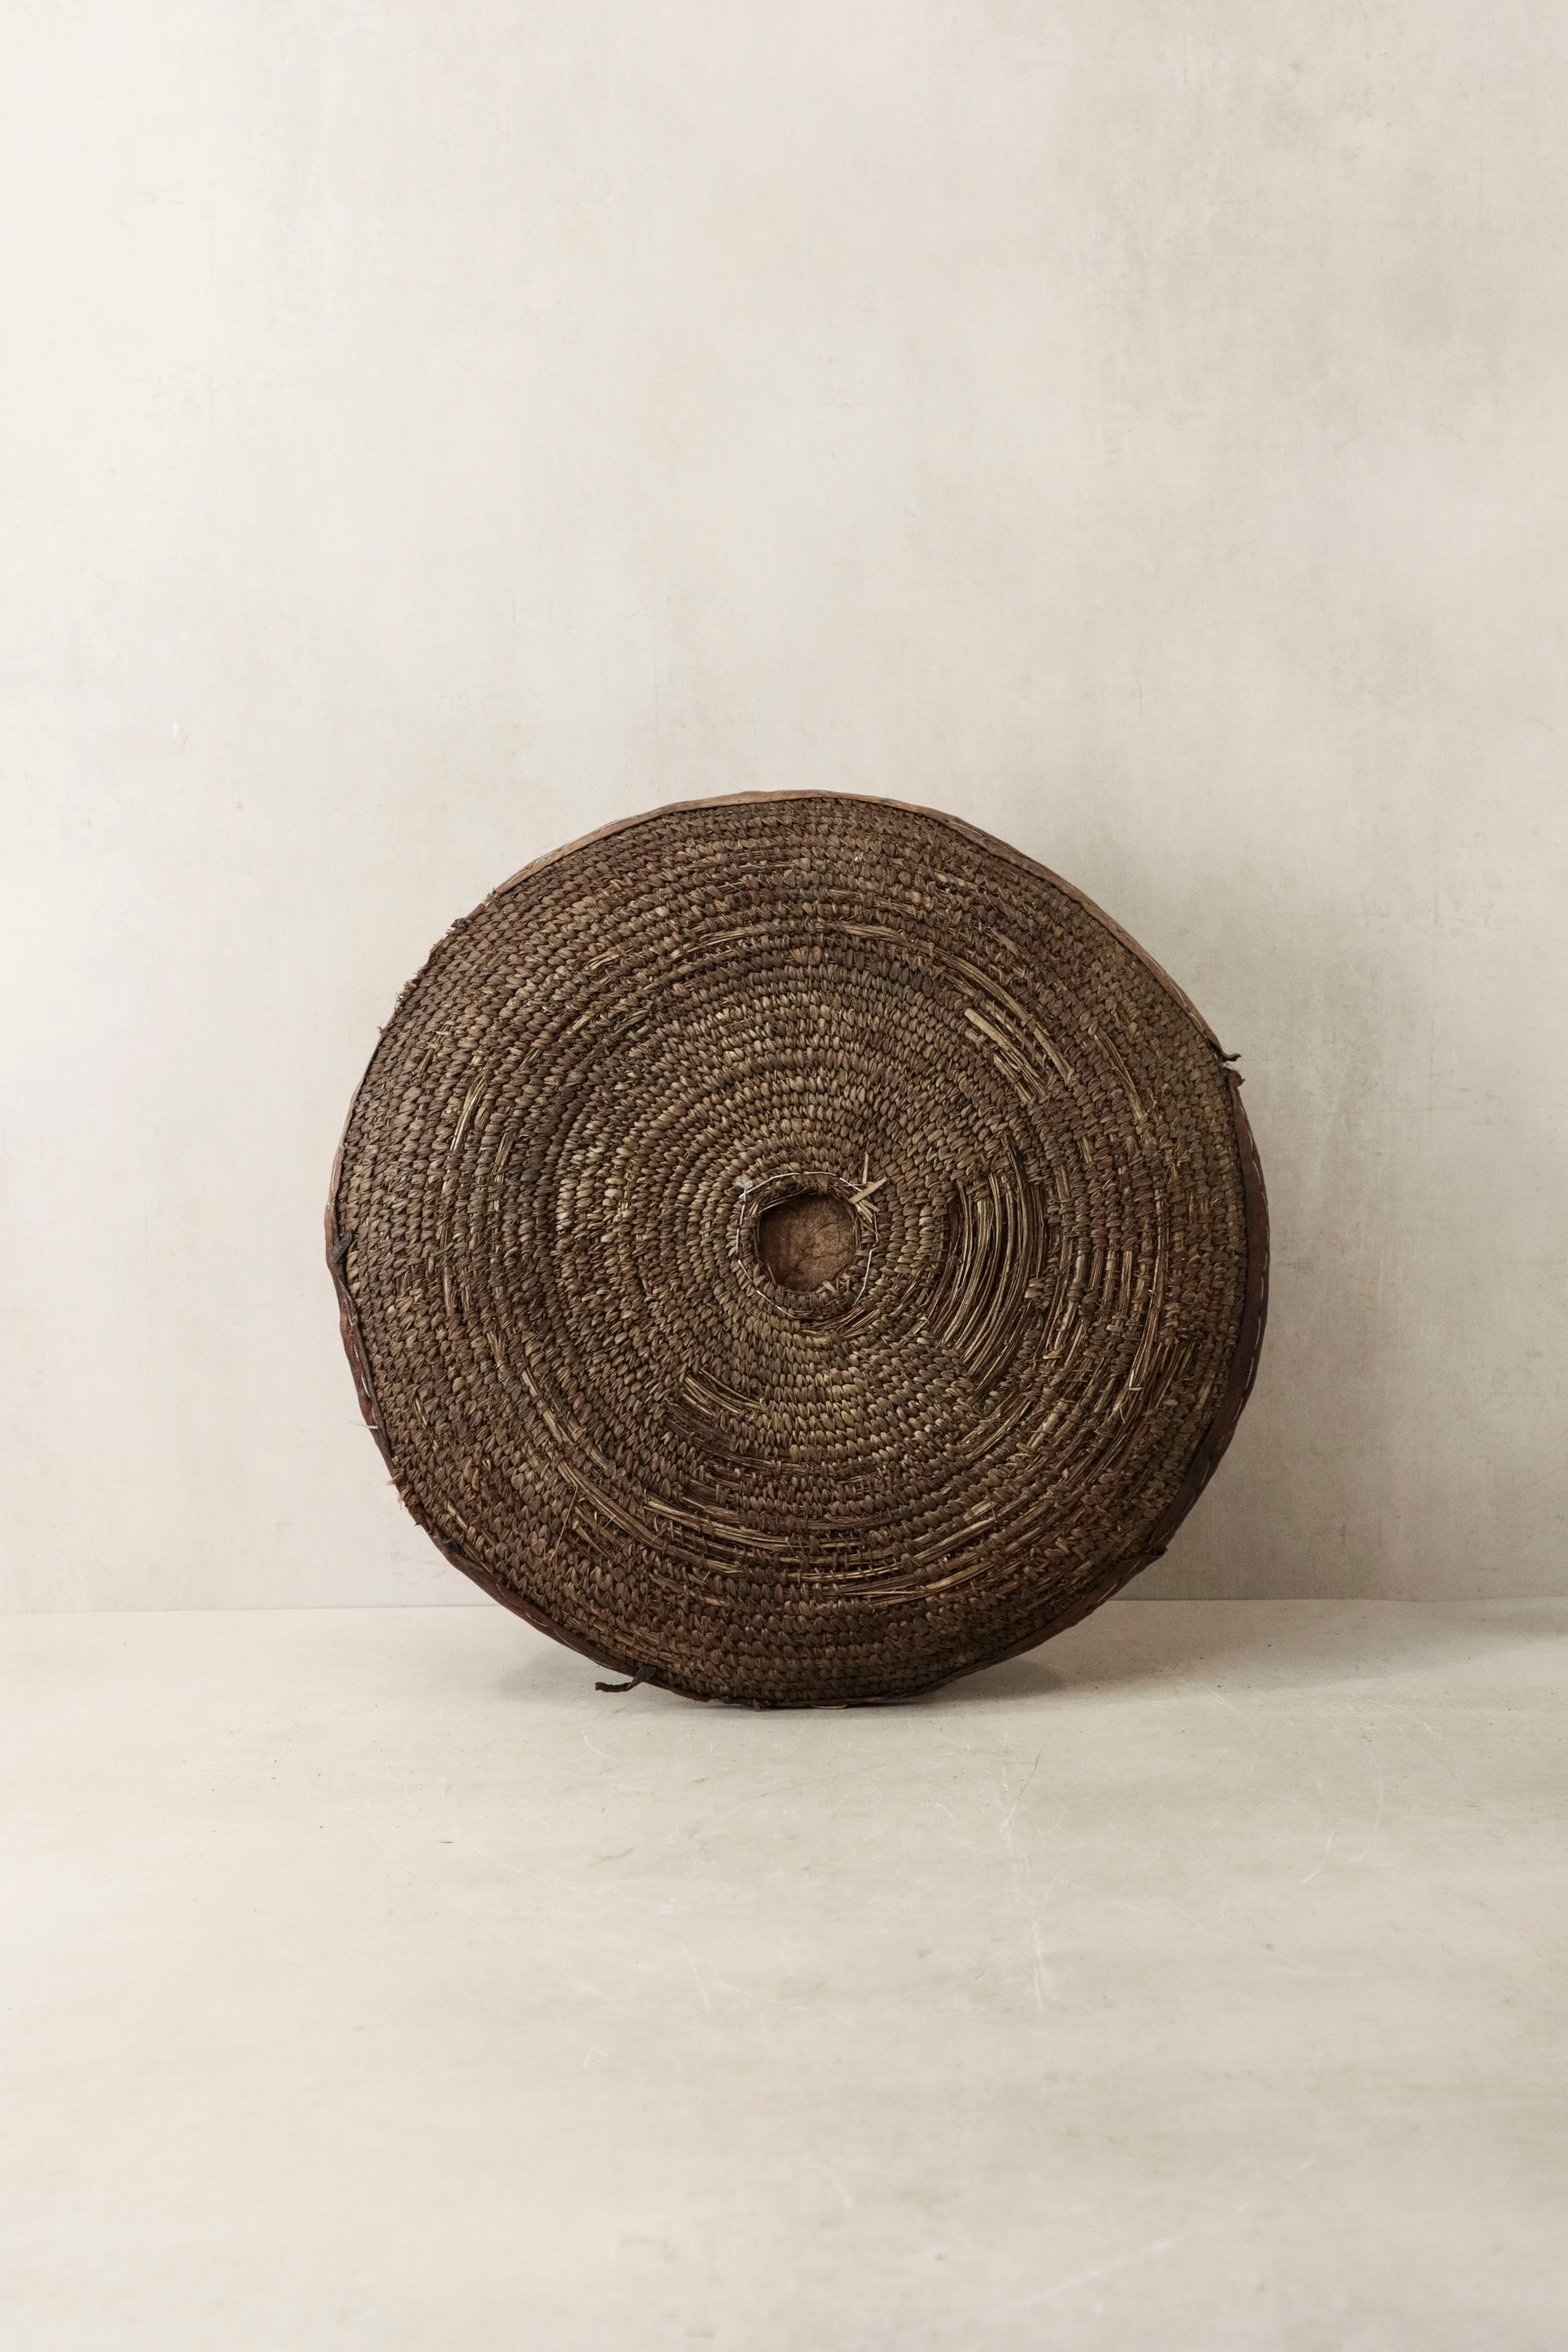 Handwoven Wall Basket - Chad - 41.9